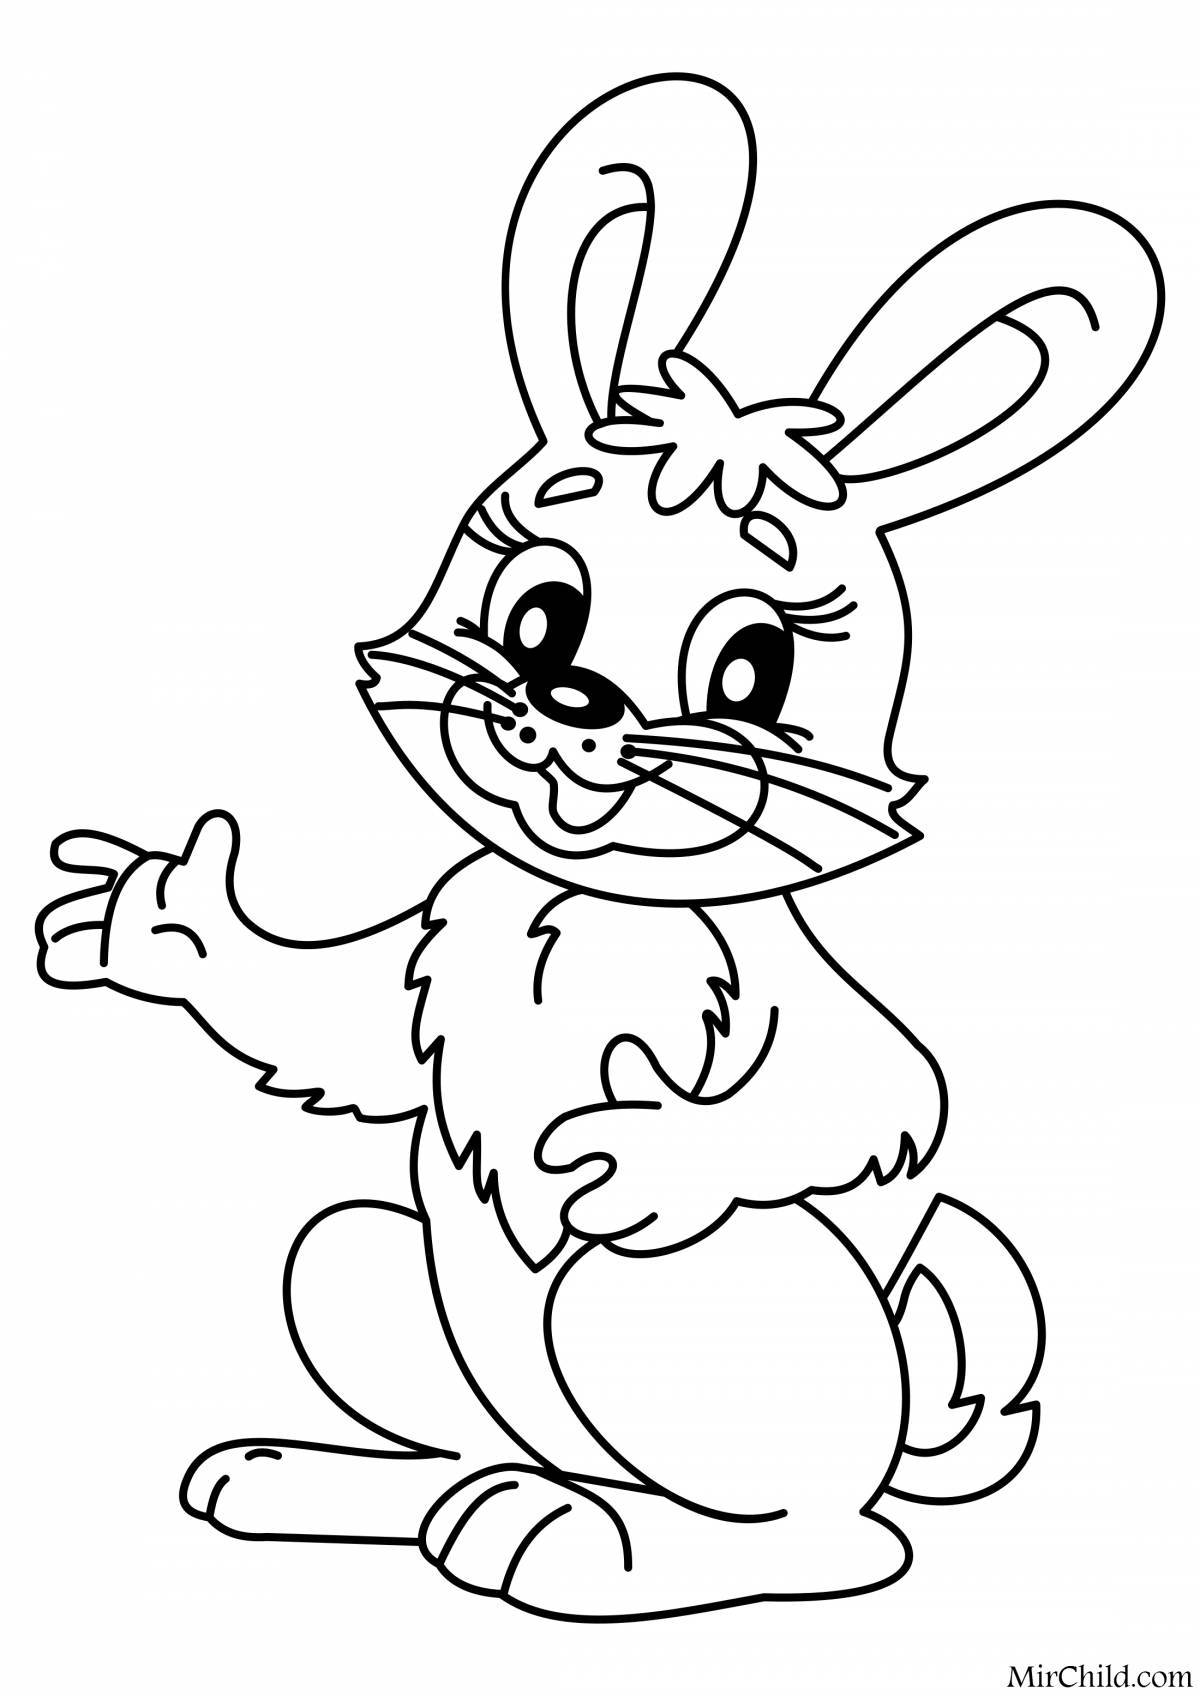 Развлекательная раскраска заяц для детей